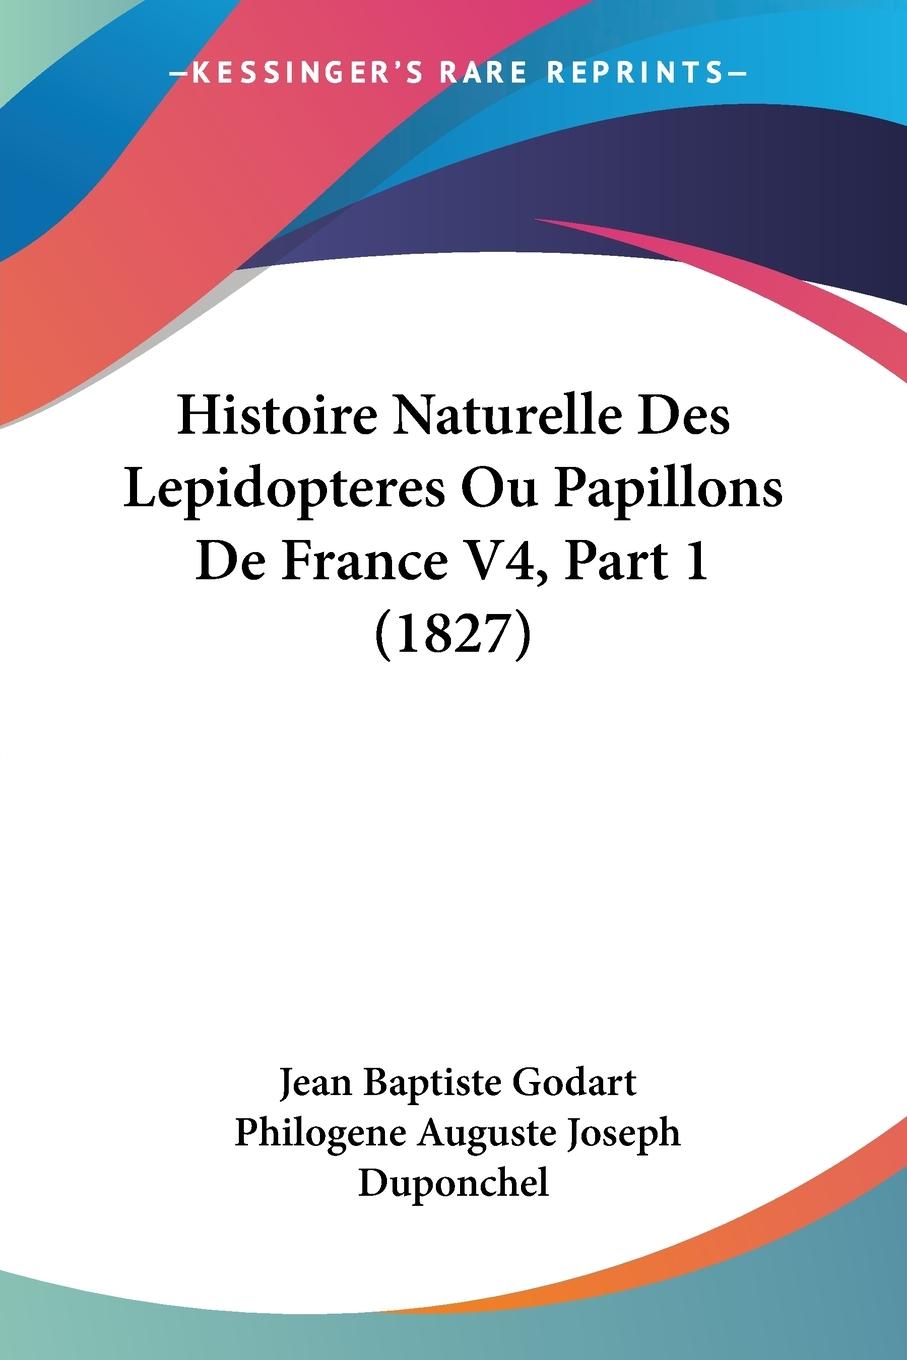 Histoire Naturelle Des Lepidopteres Ou Papillons De France V4, Part 1 (1827) - Godart, Jean Baptiste Duponchel, Philogene Auguste Joseph